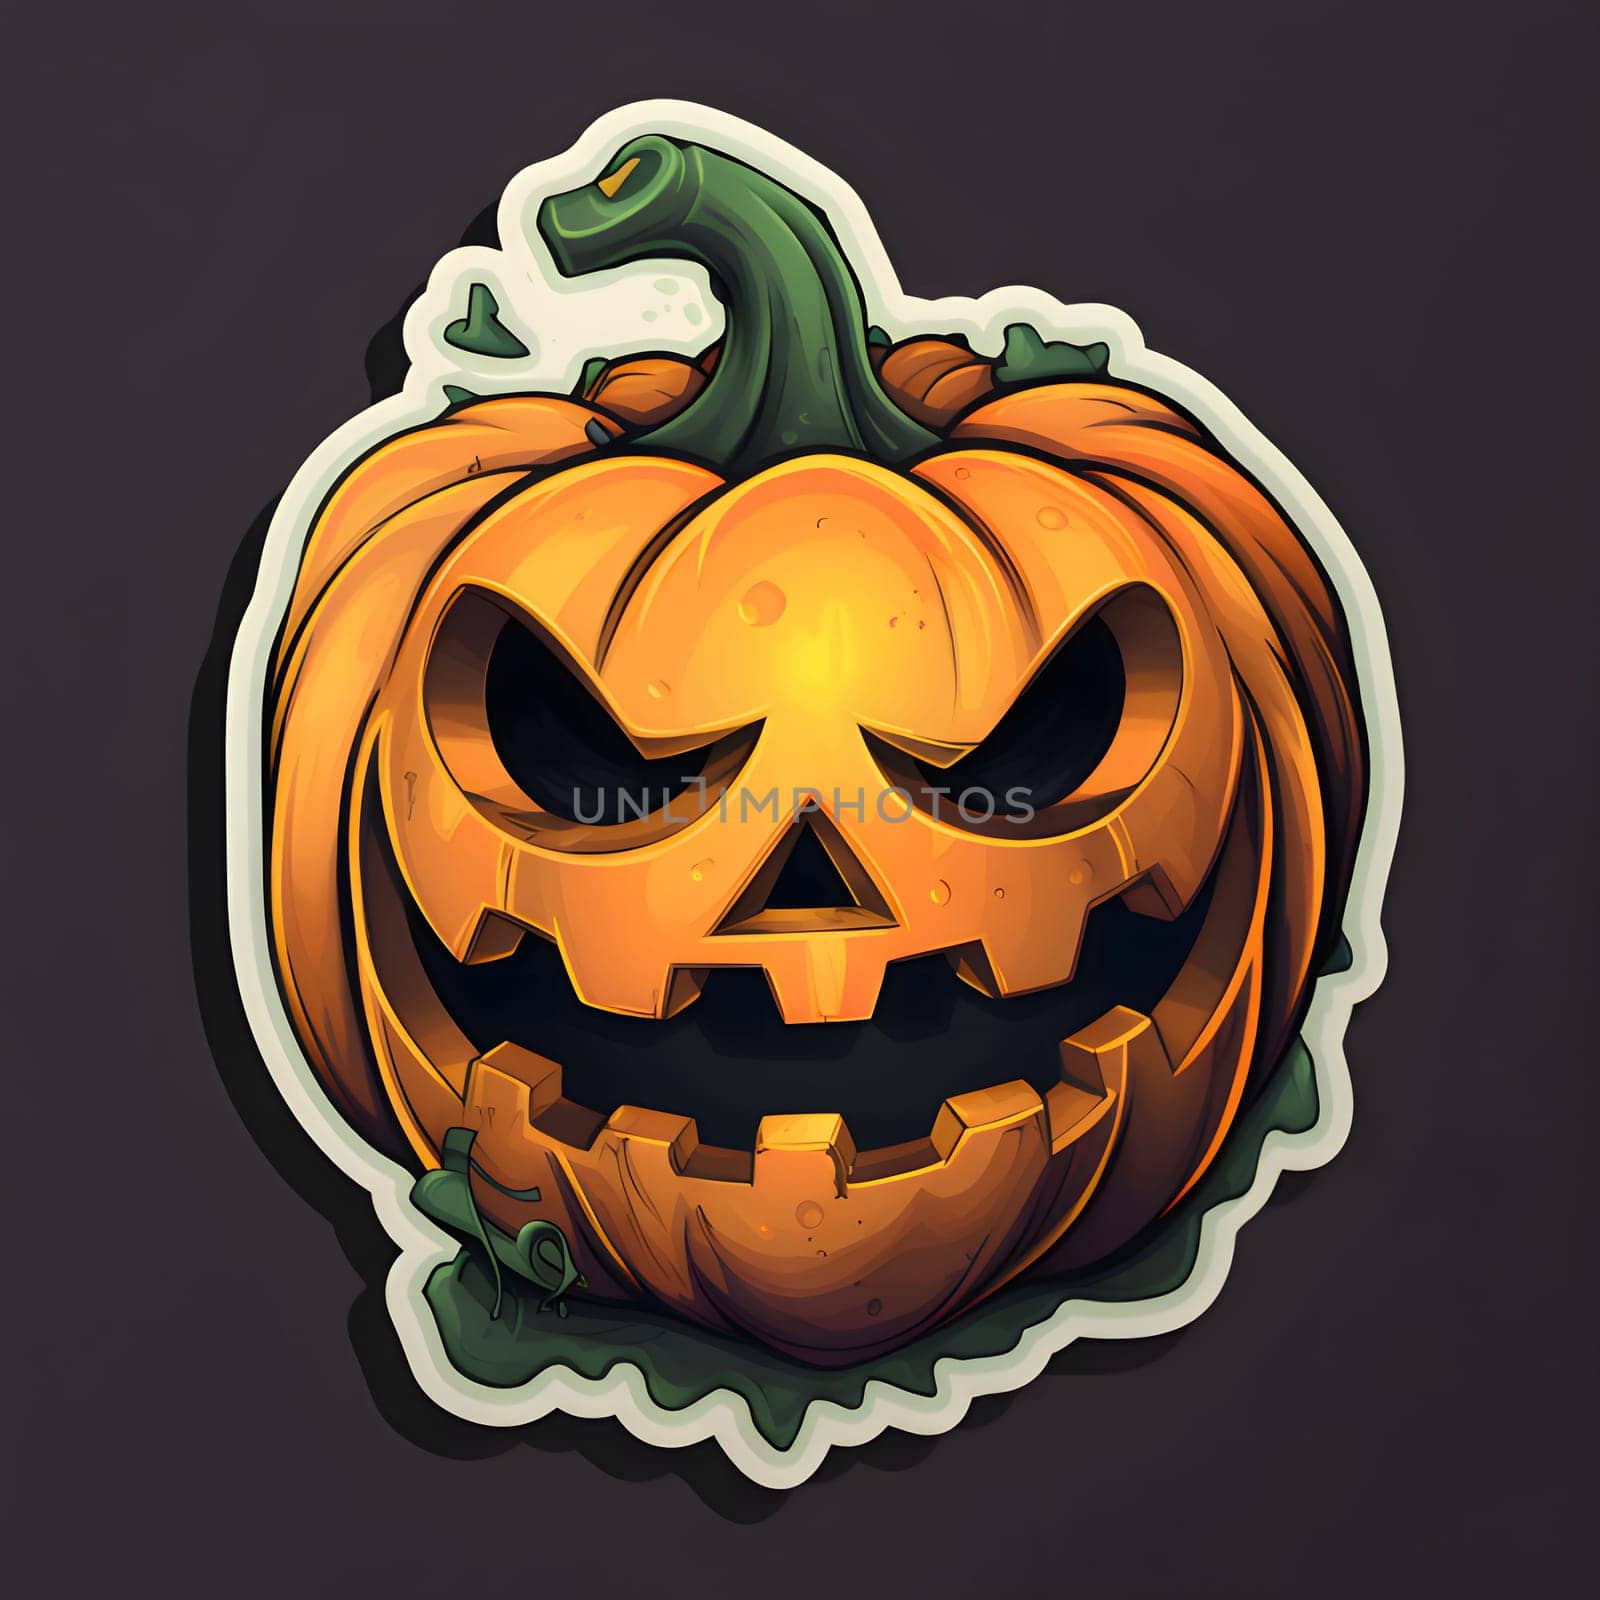 Sticker dark evil jack-o-lantern pumpkin, Halloween image on a dark isolated background. Atmosphere of darkness and fear.